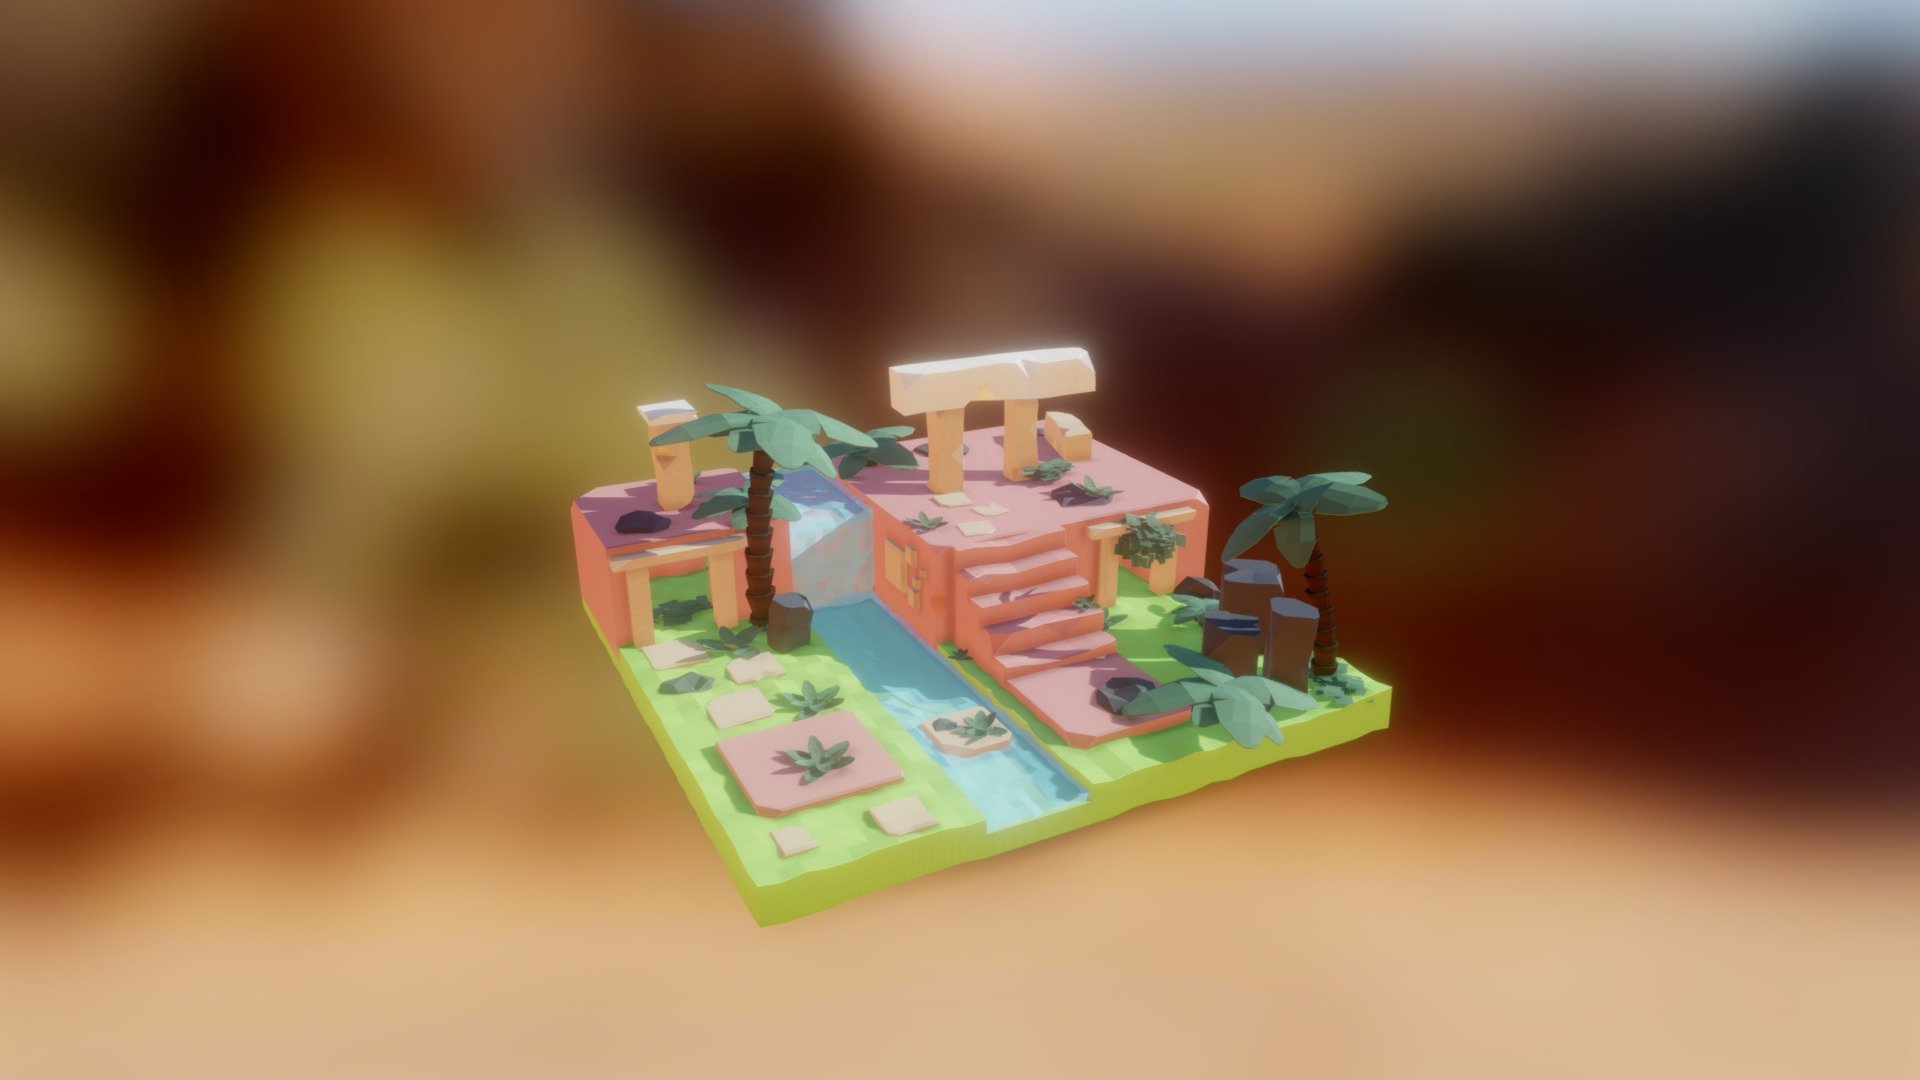 A low poly forest scene moddeled in Blender. 

Website: https://www.colinfearing.com - Jungle Ruins - Download Free 3D model by Colin Fearing (@colinfearing) 3d model